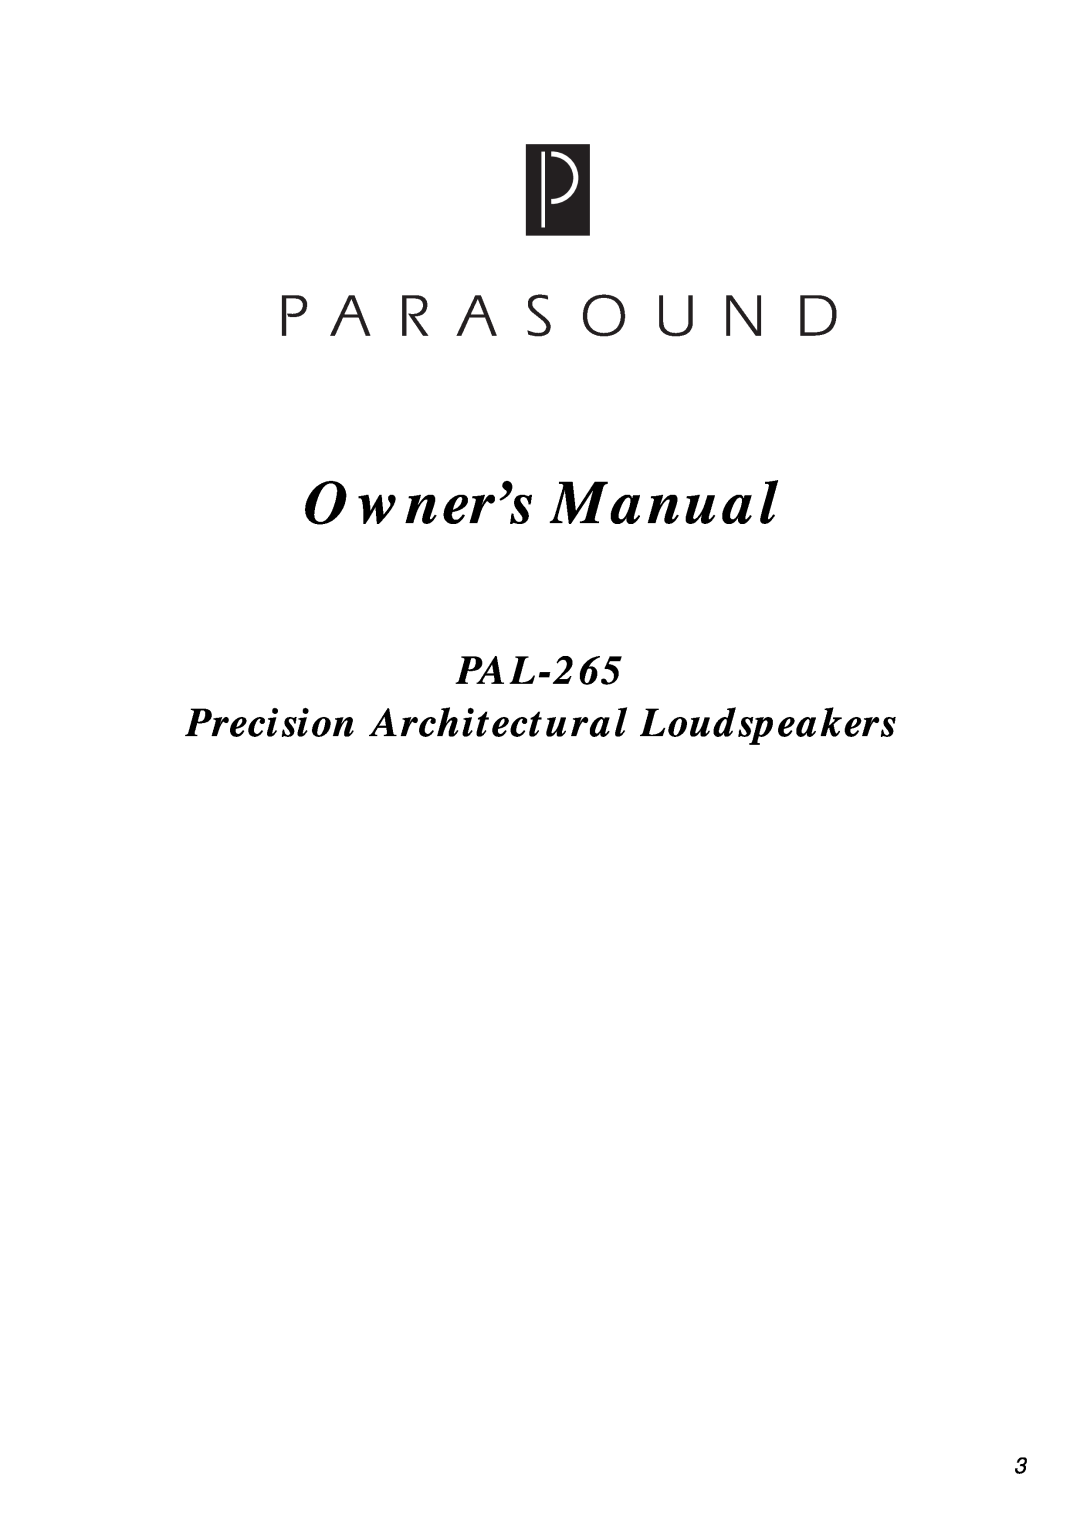 Parasound PAL-265 owner manual PA L-265 Precision Architectural Loudspeakers 